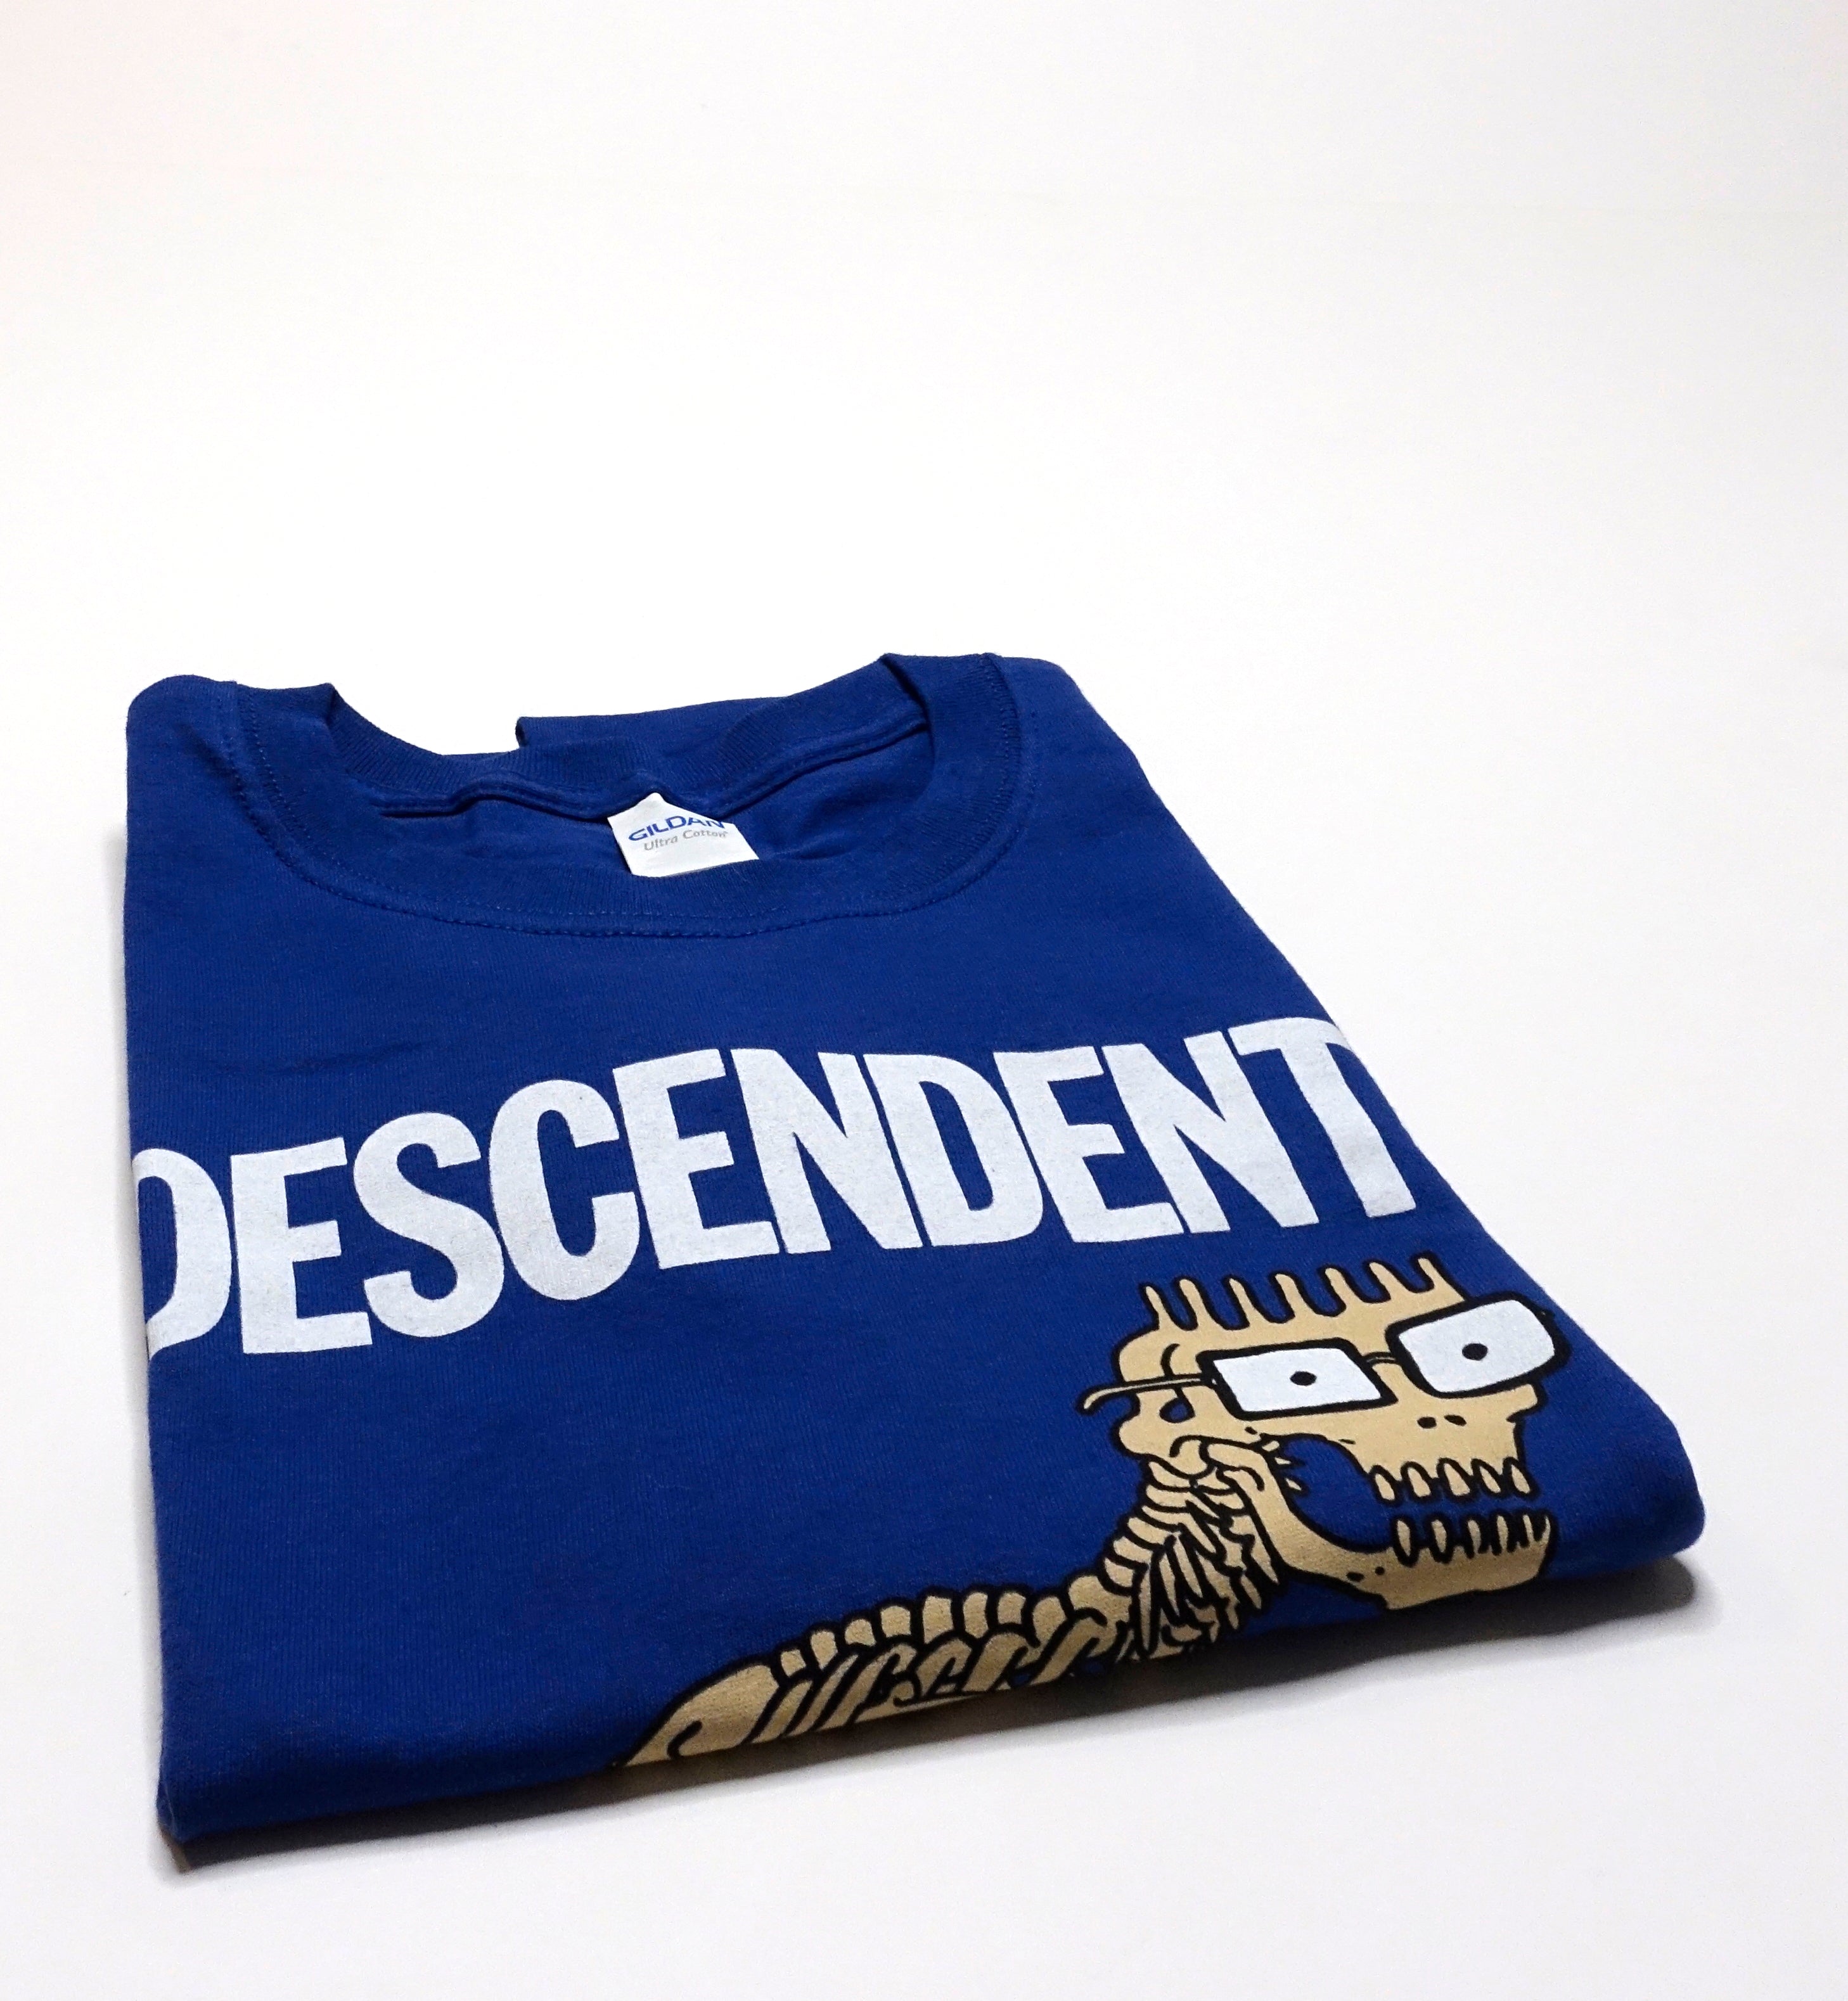 Descendents -  New York 2018 Tour Shirt Size Large